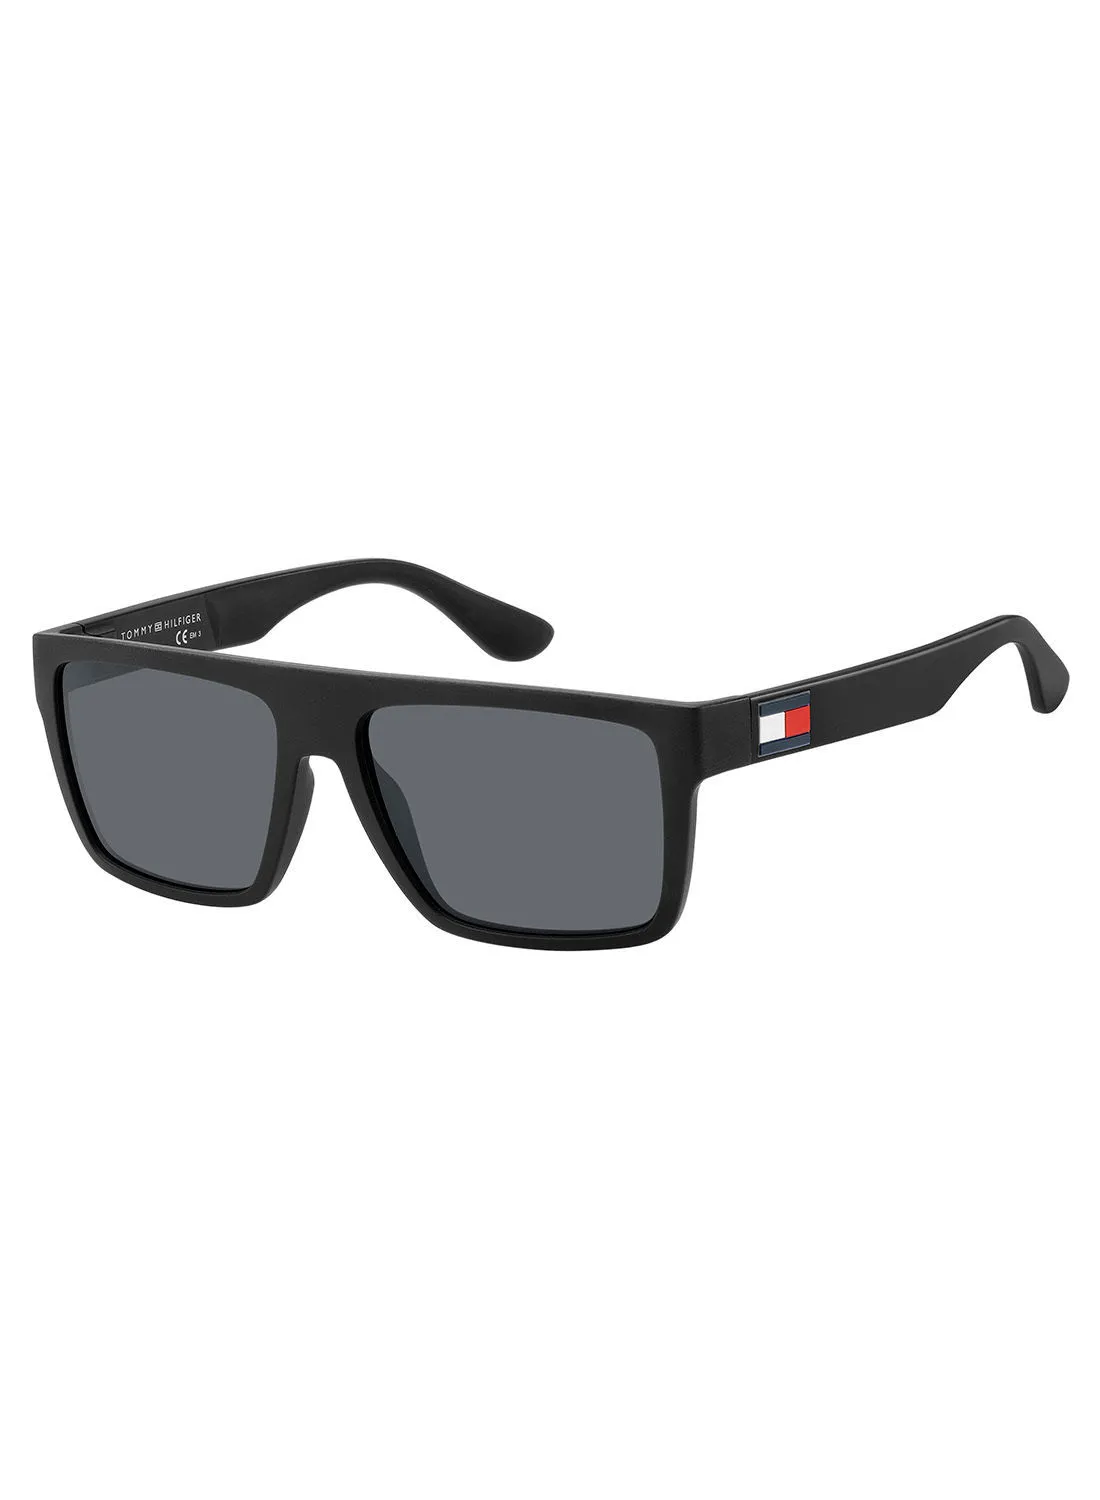 TOMMY HILFIGER UV Protection Rectangular Eyewear Sunglasses TH 1605/S       MTT BLACK 56